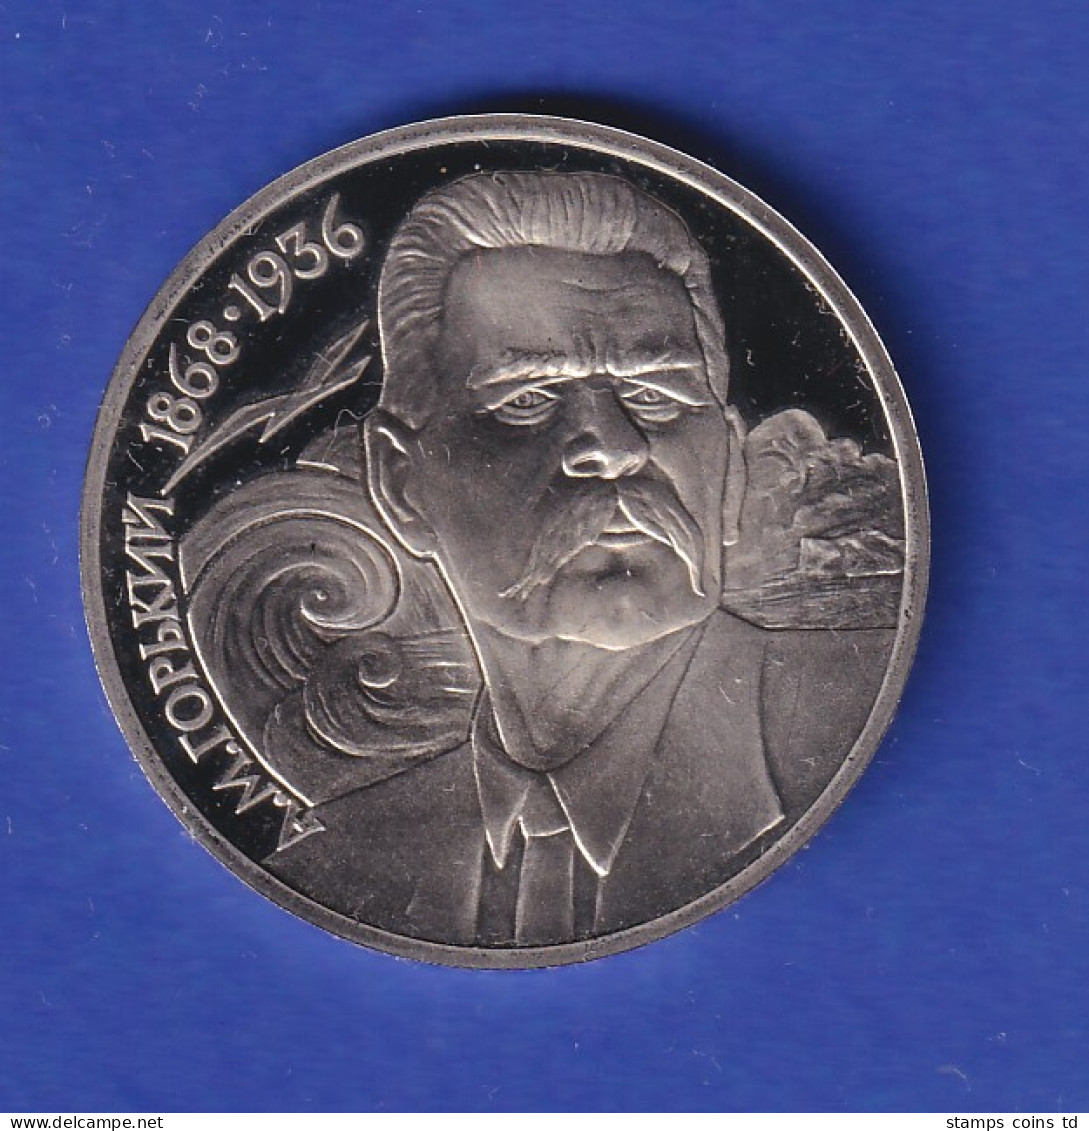 Russland Sowjetunion 1 Rubel Maxim Gorki 1988 - Russland